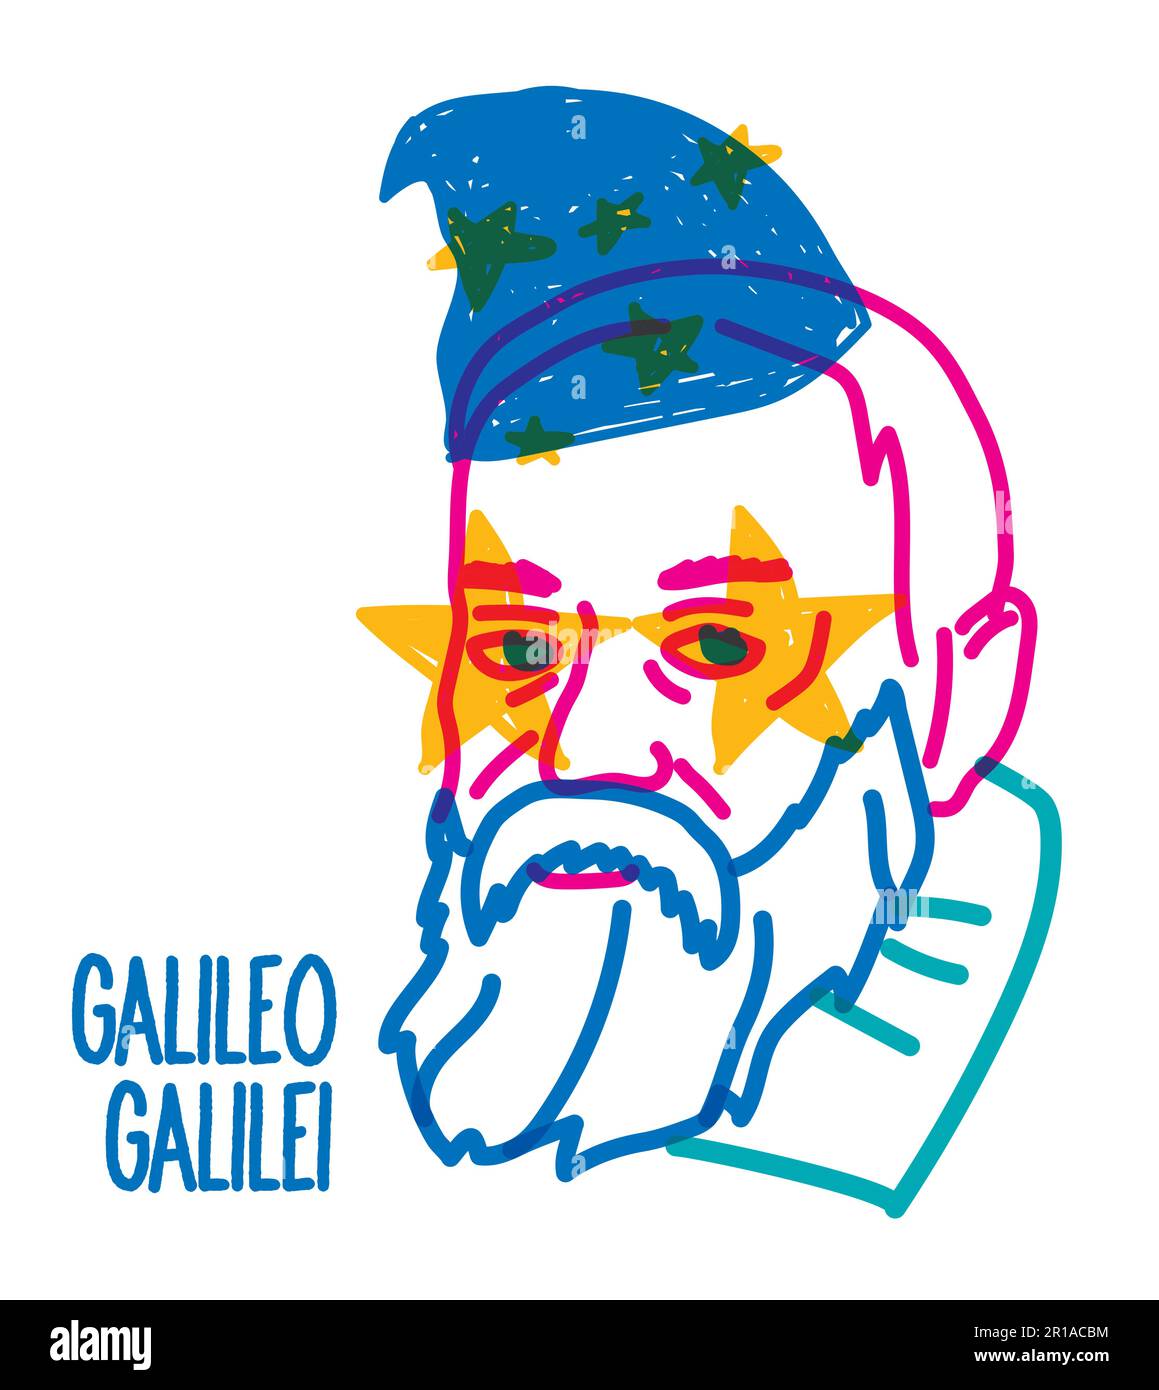 Galileo Galilei | ClipArt ETC